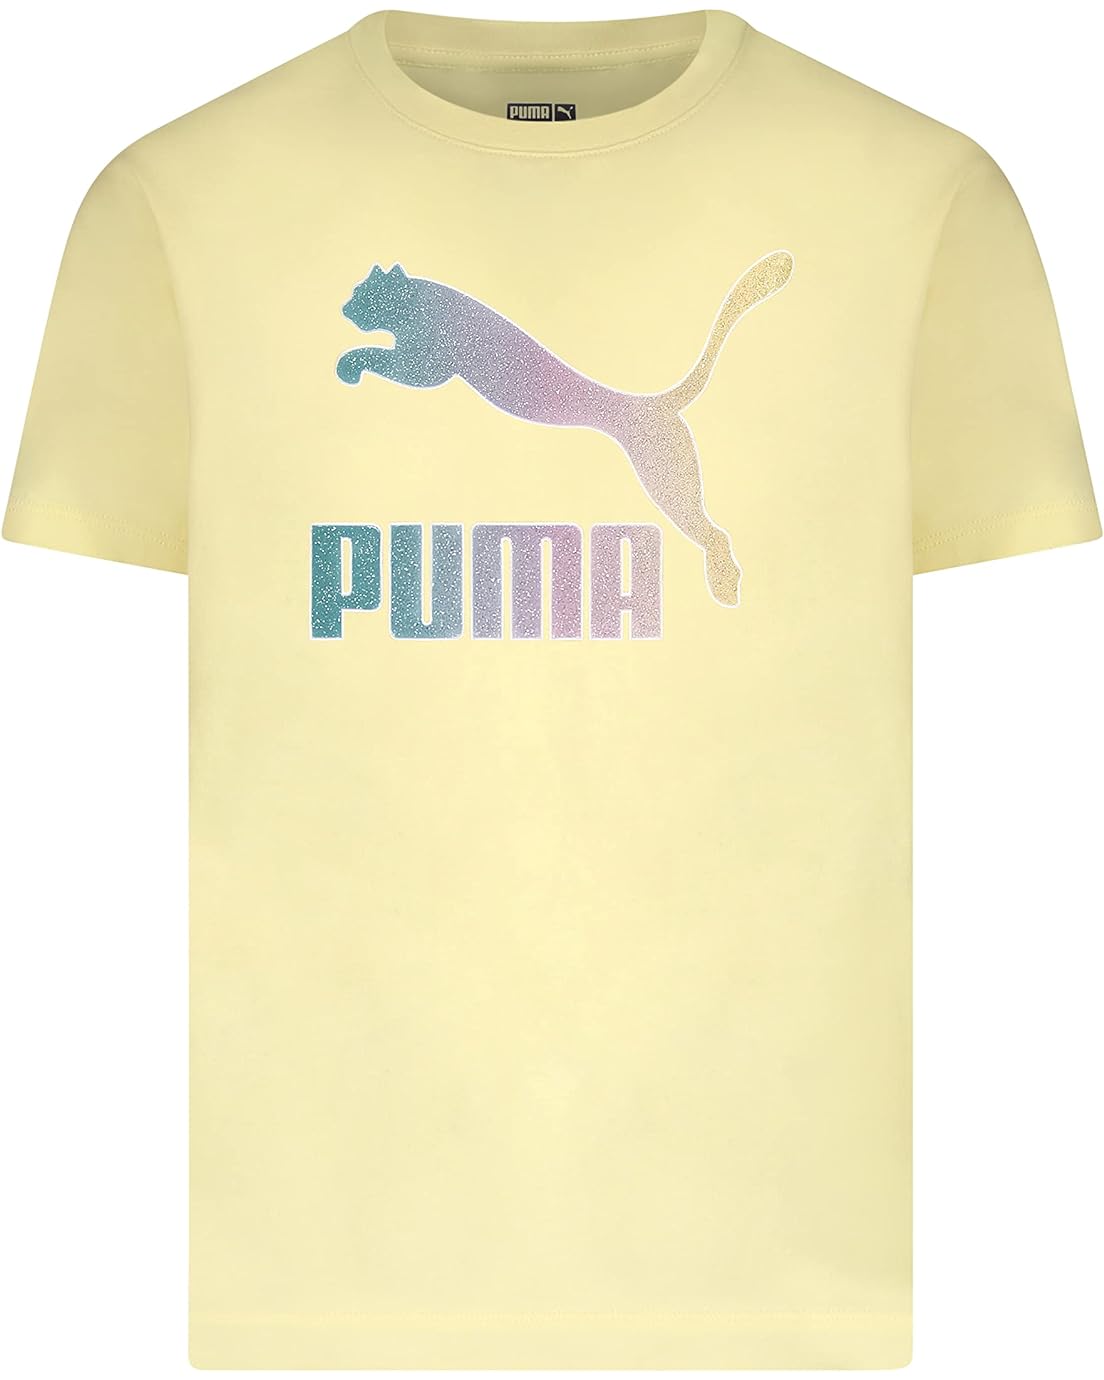 PUMA Kids Crystal Galaxy Pack Cotton Jersey Short Sleeve Graphic Tee (Big Kids)